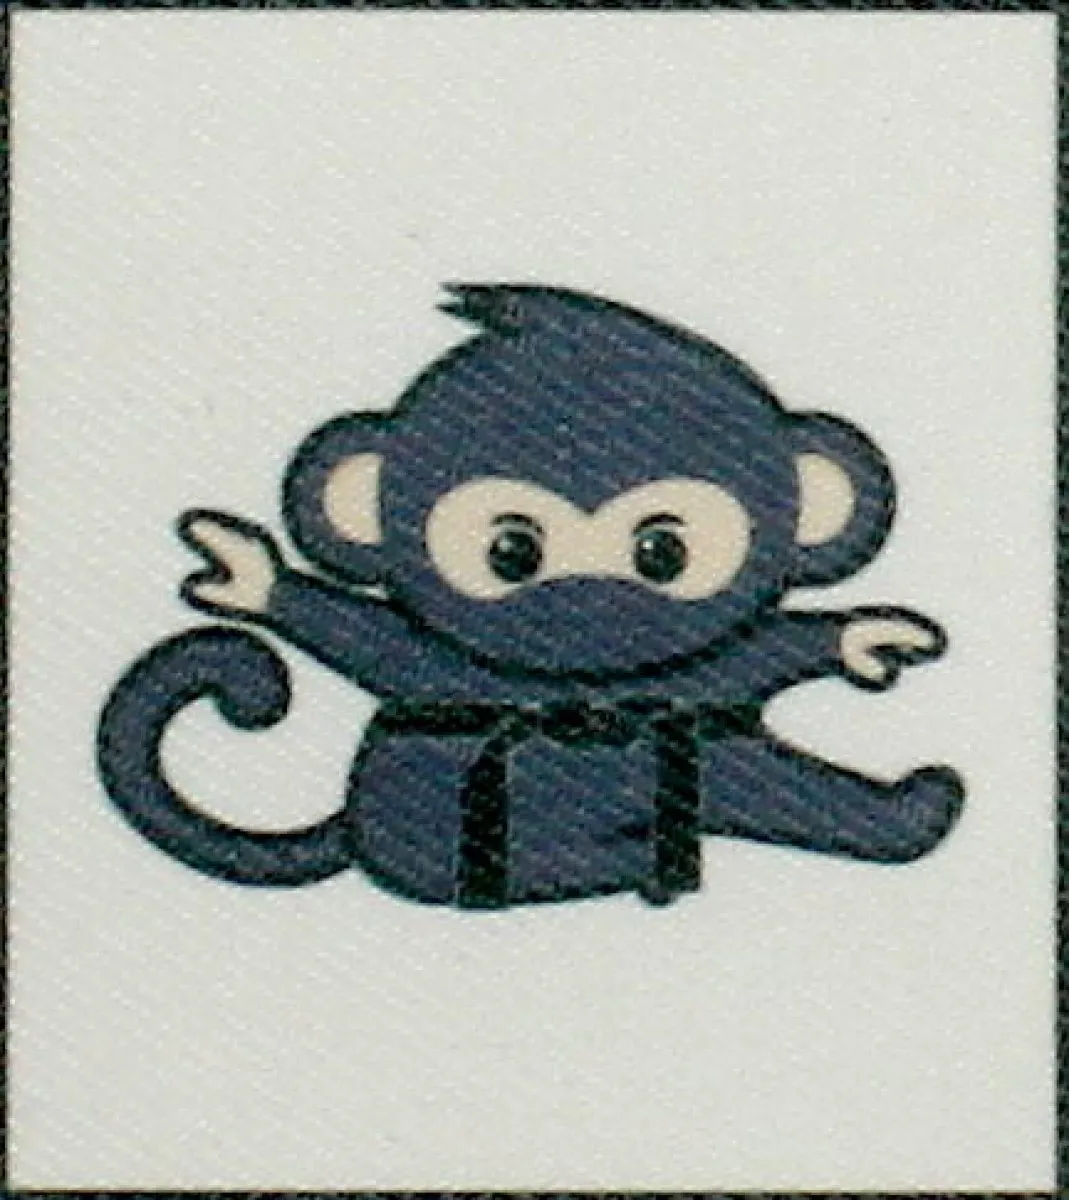 Ceinture patch monkey